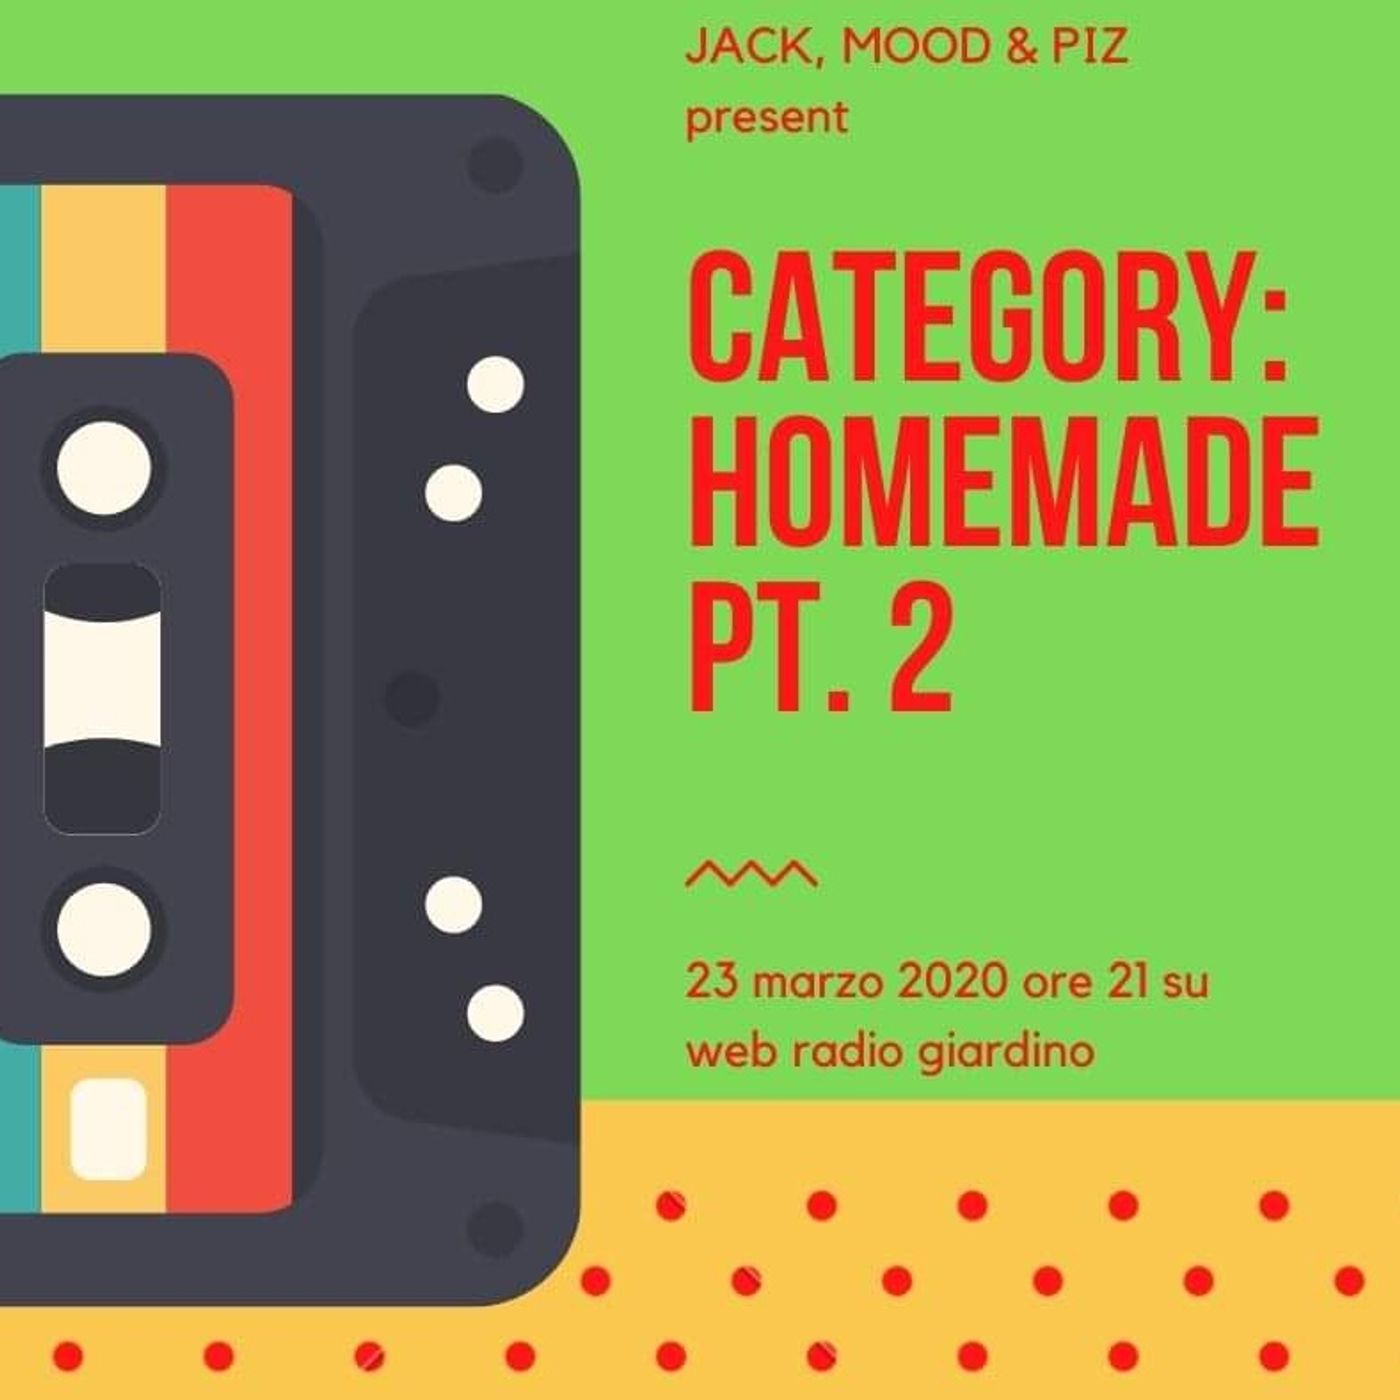 Homemade Playlist pt.2 - Jack, Mood & Piz - s01e22